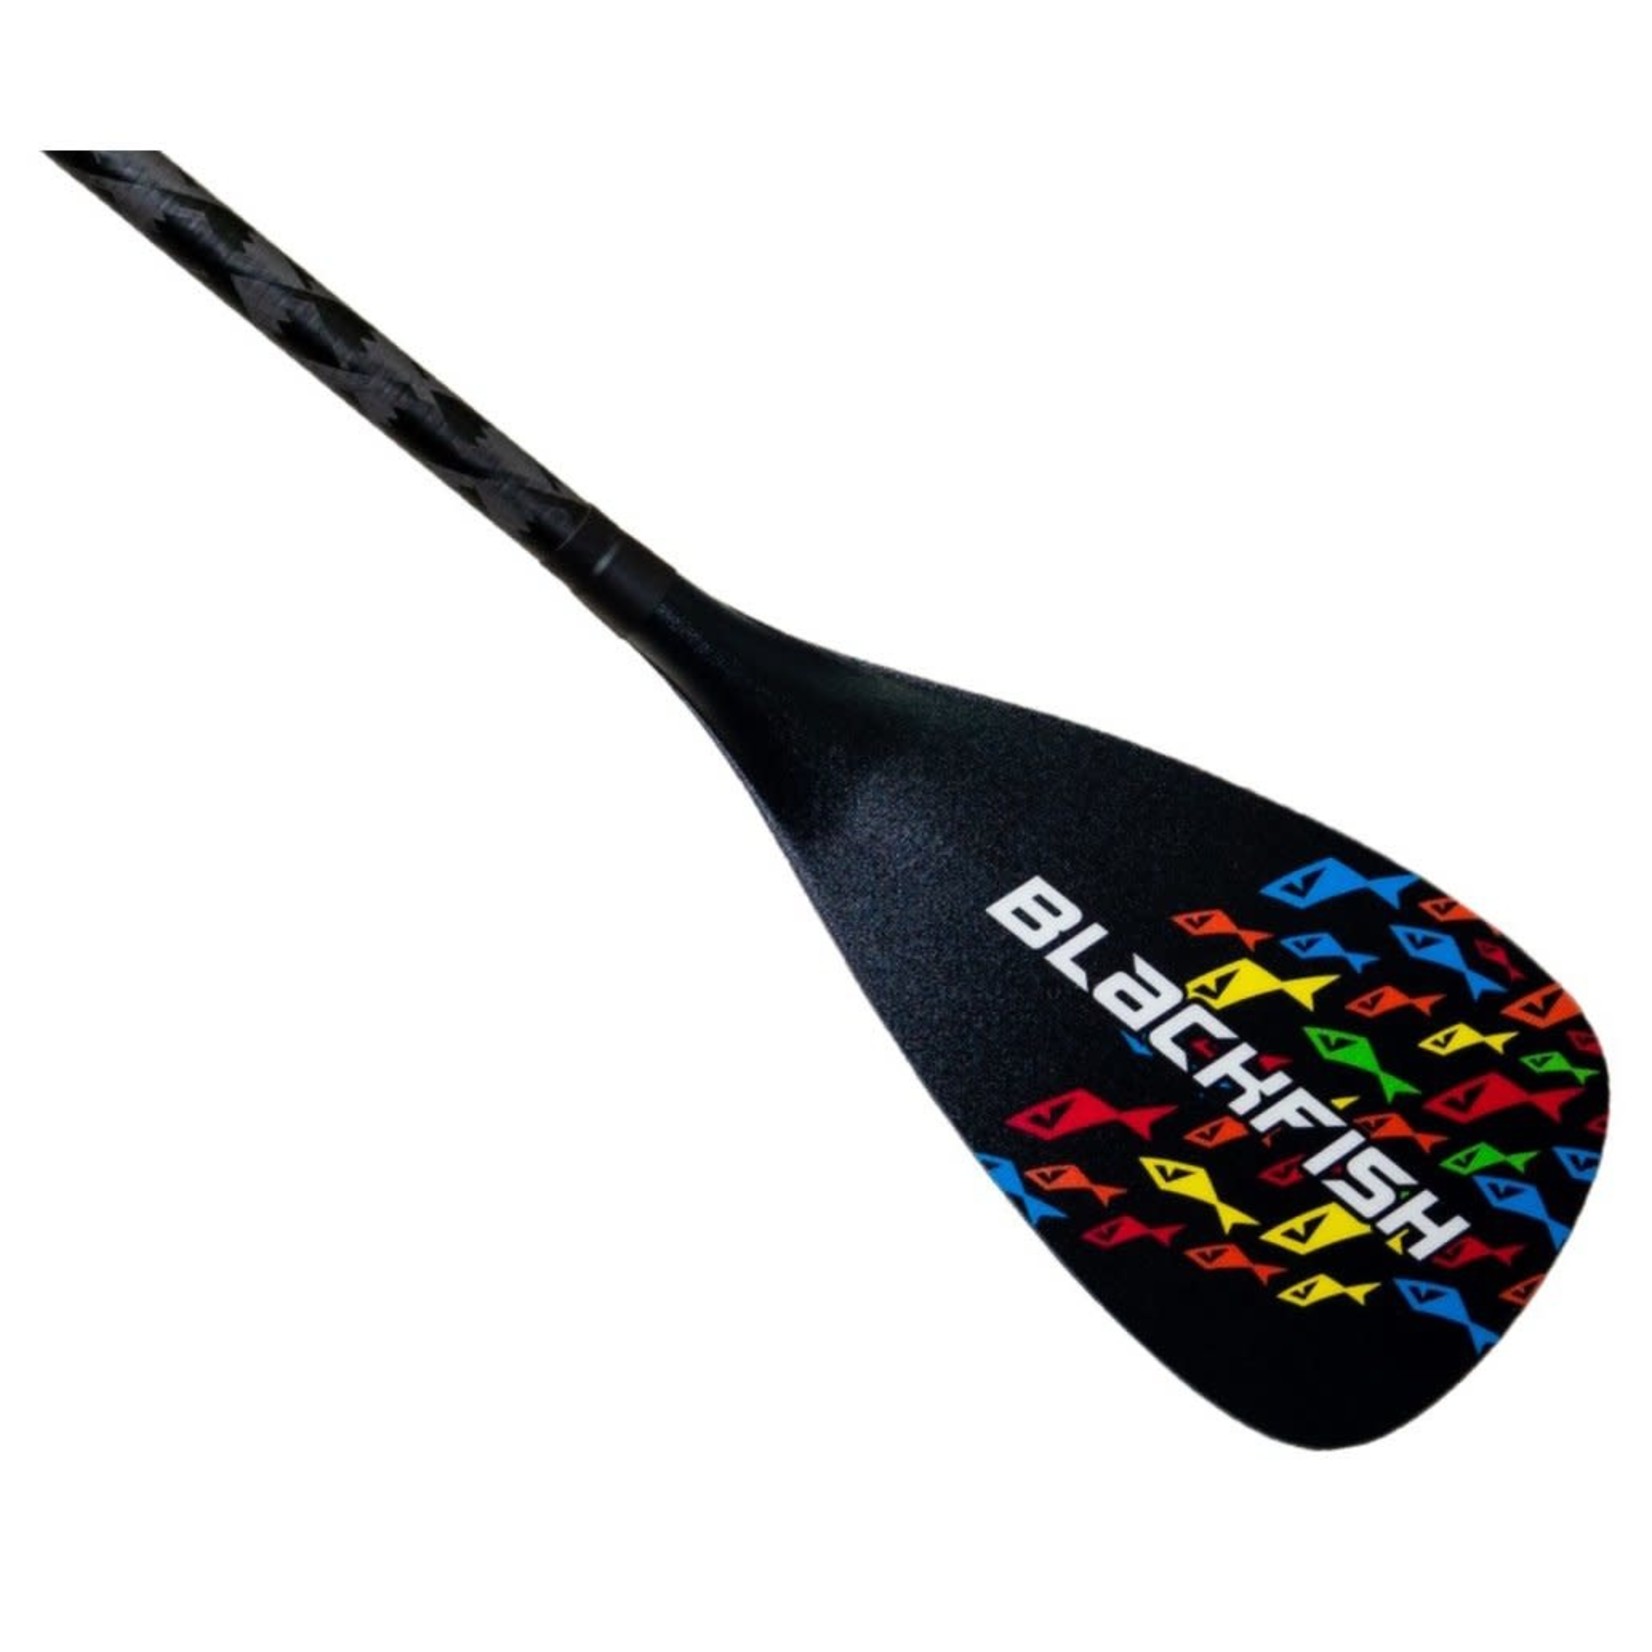 Blackfish Nootka fishskin 520 paddle